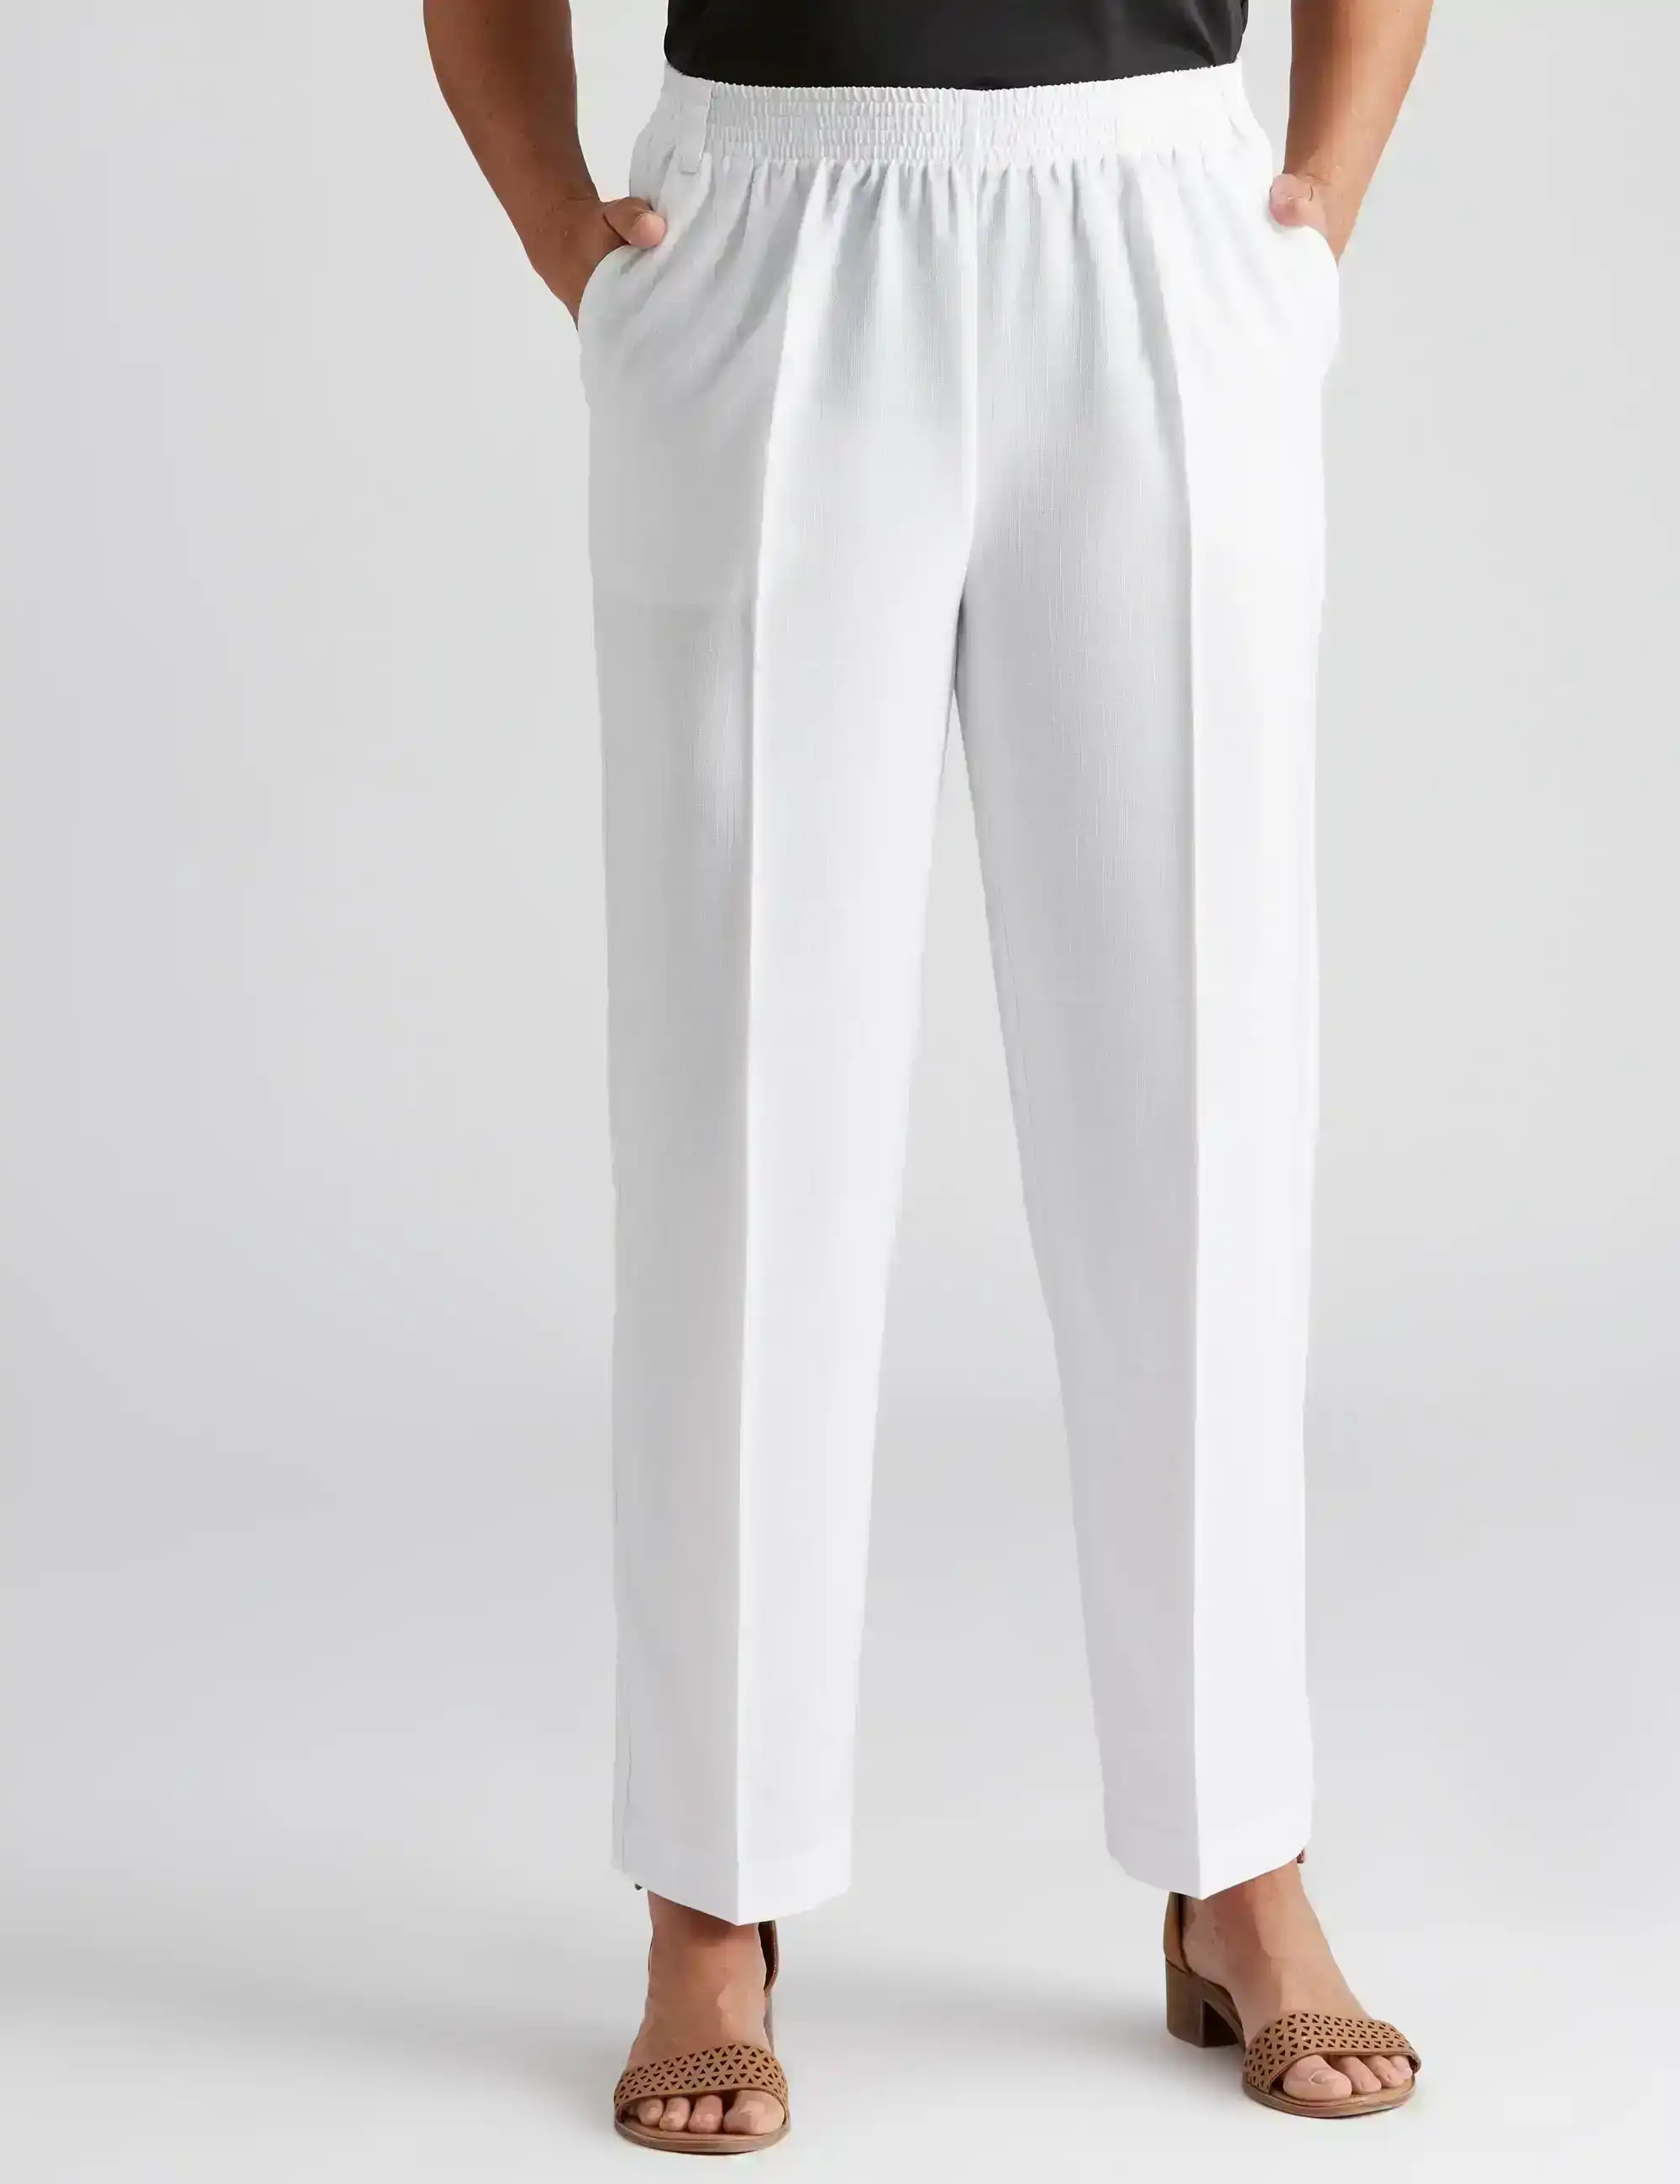 Millers Essential Short Length Pants